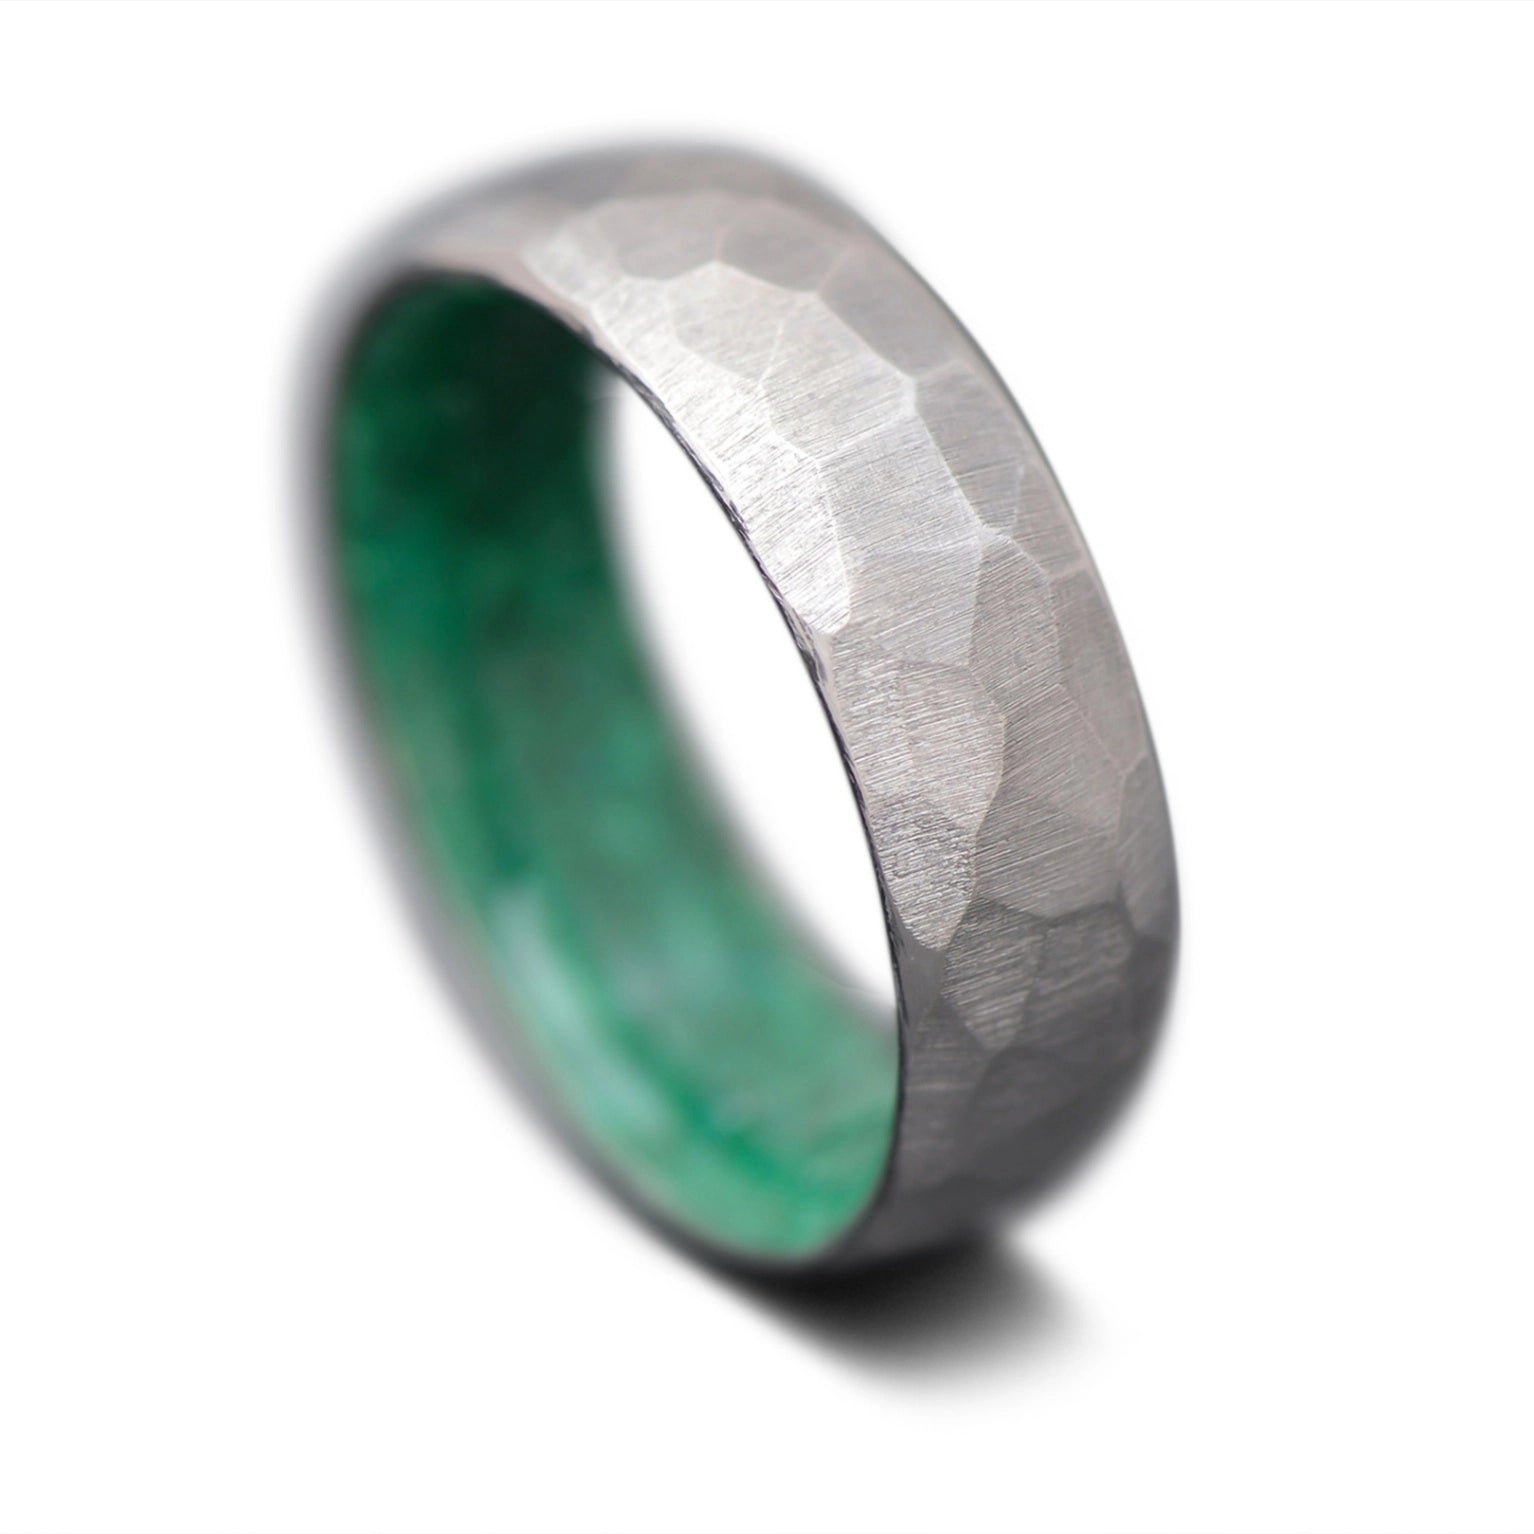 Titanium Core ring with Malachite inner sleeve, 7mm -THE TITAN